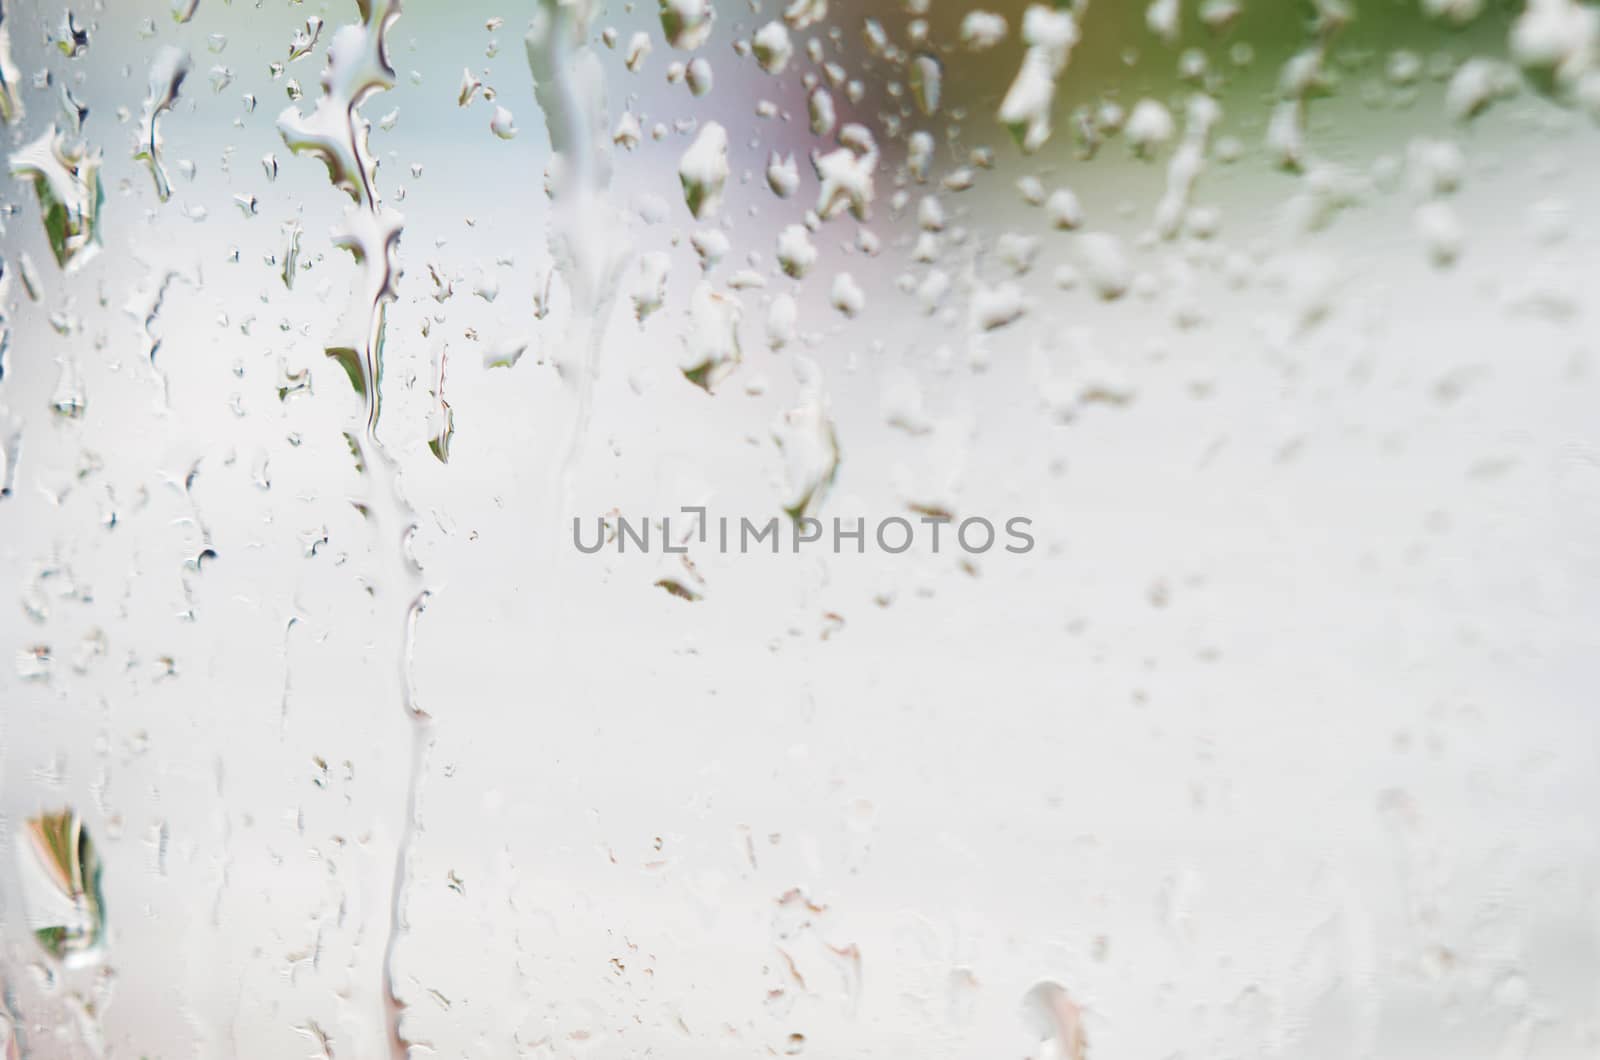 Macro shot of rain water drops on windows - selective focus